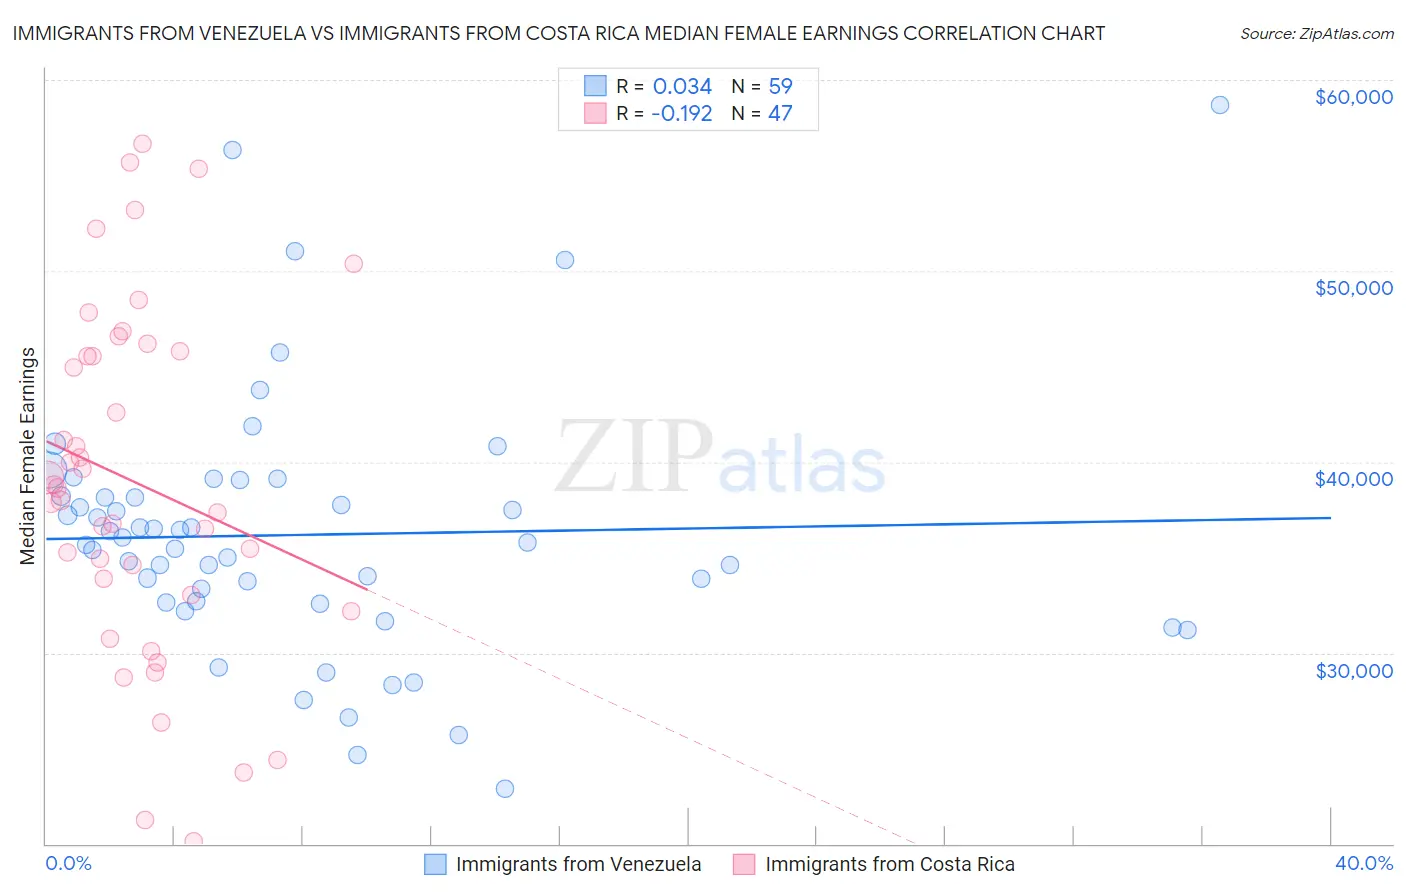 Immigrants from Venezuela vs Immigrants from Costa Rica Median Female Earnings